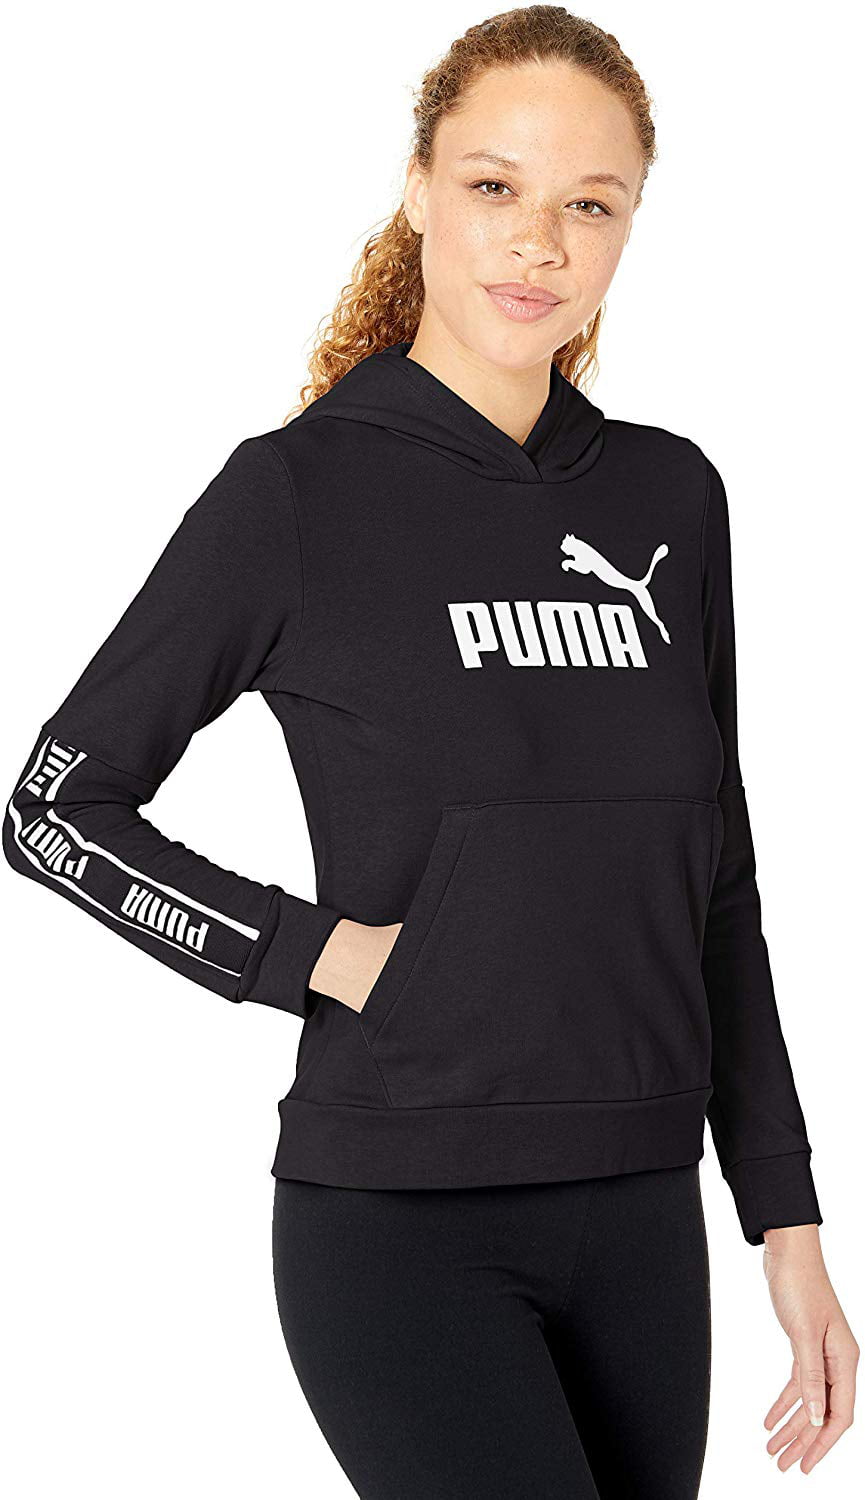 PUMA - Puma Women's Amplified French Terry Hoodie 01-S - Walmart.com ...